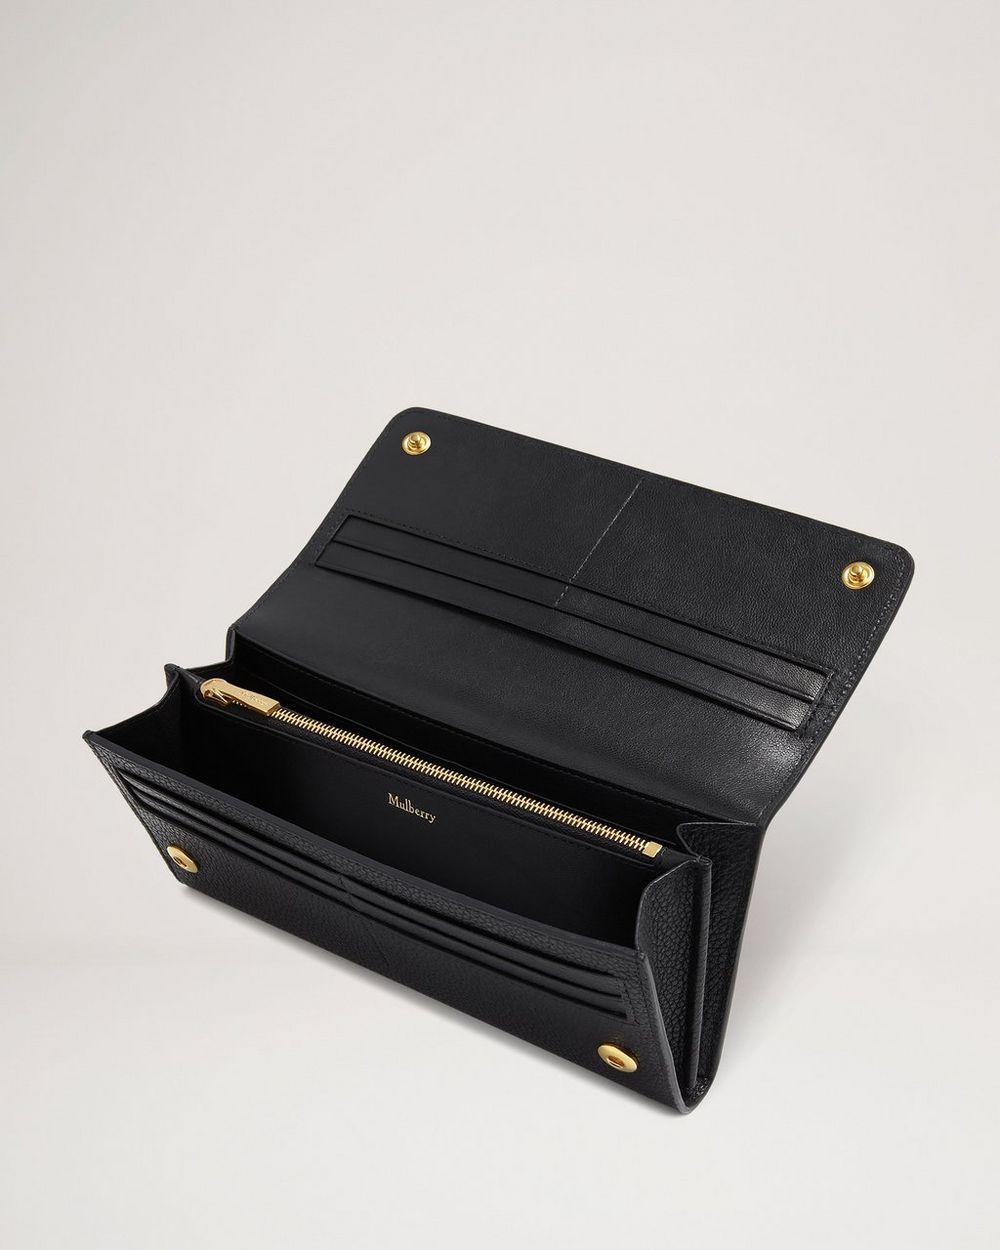 Prada Monochrome Saffiano Leather Bag (Varied Colors)